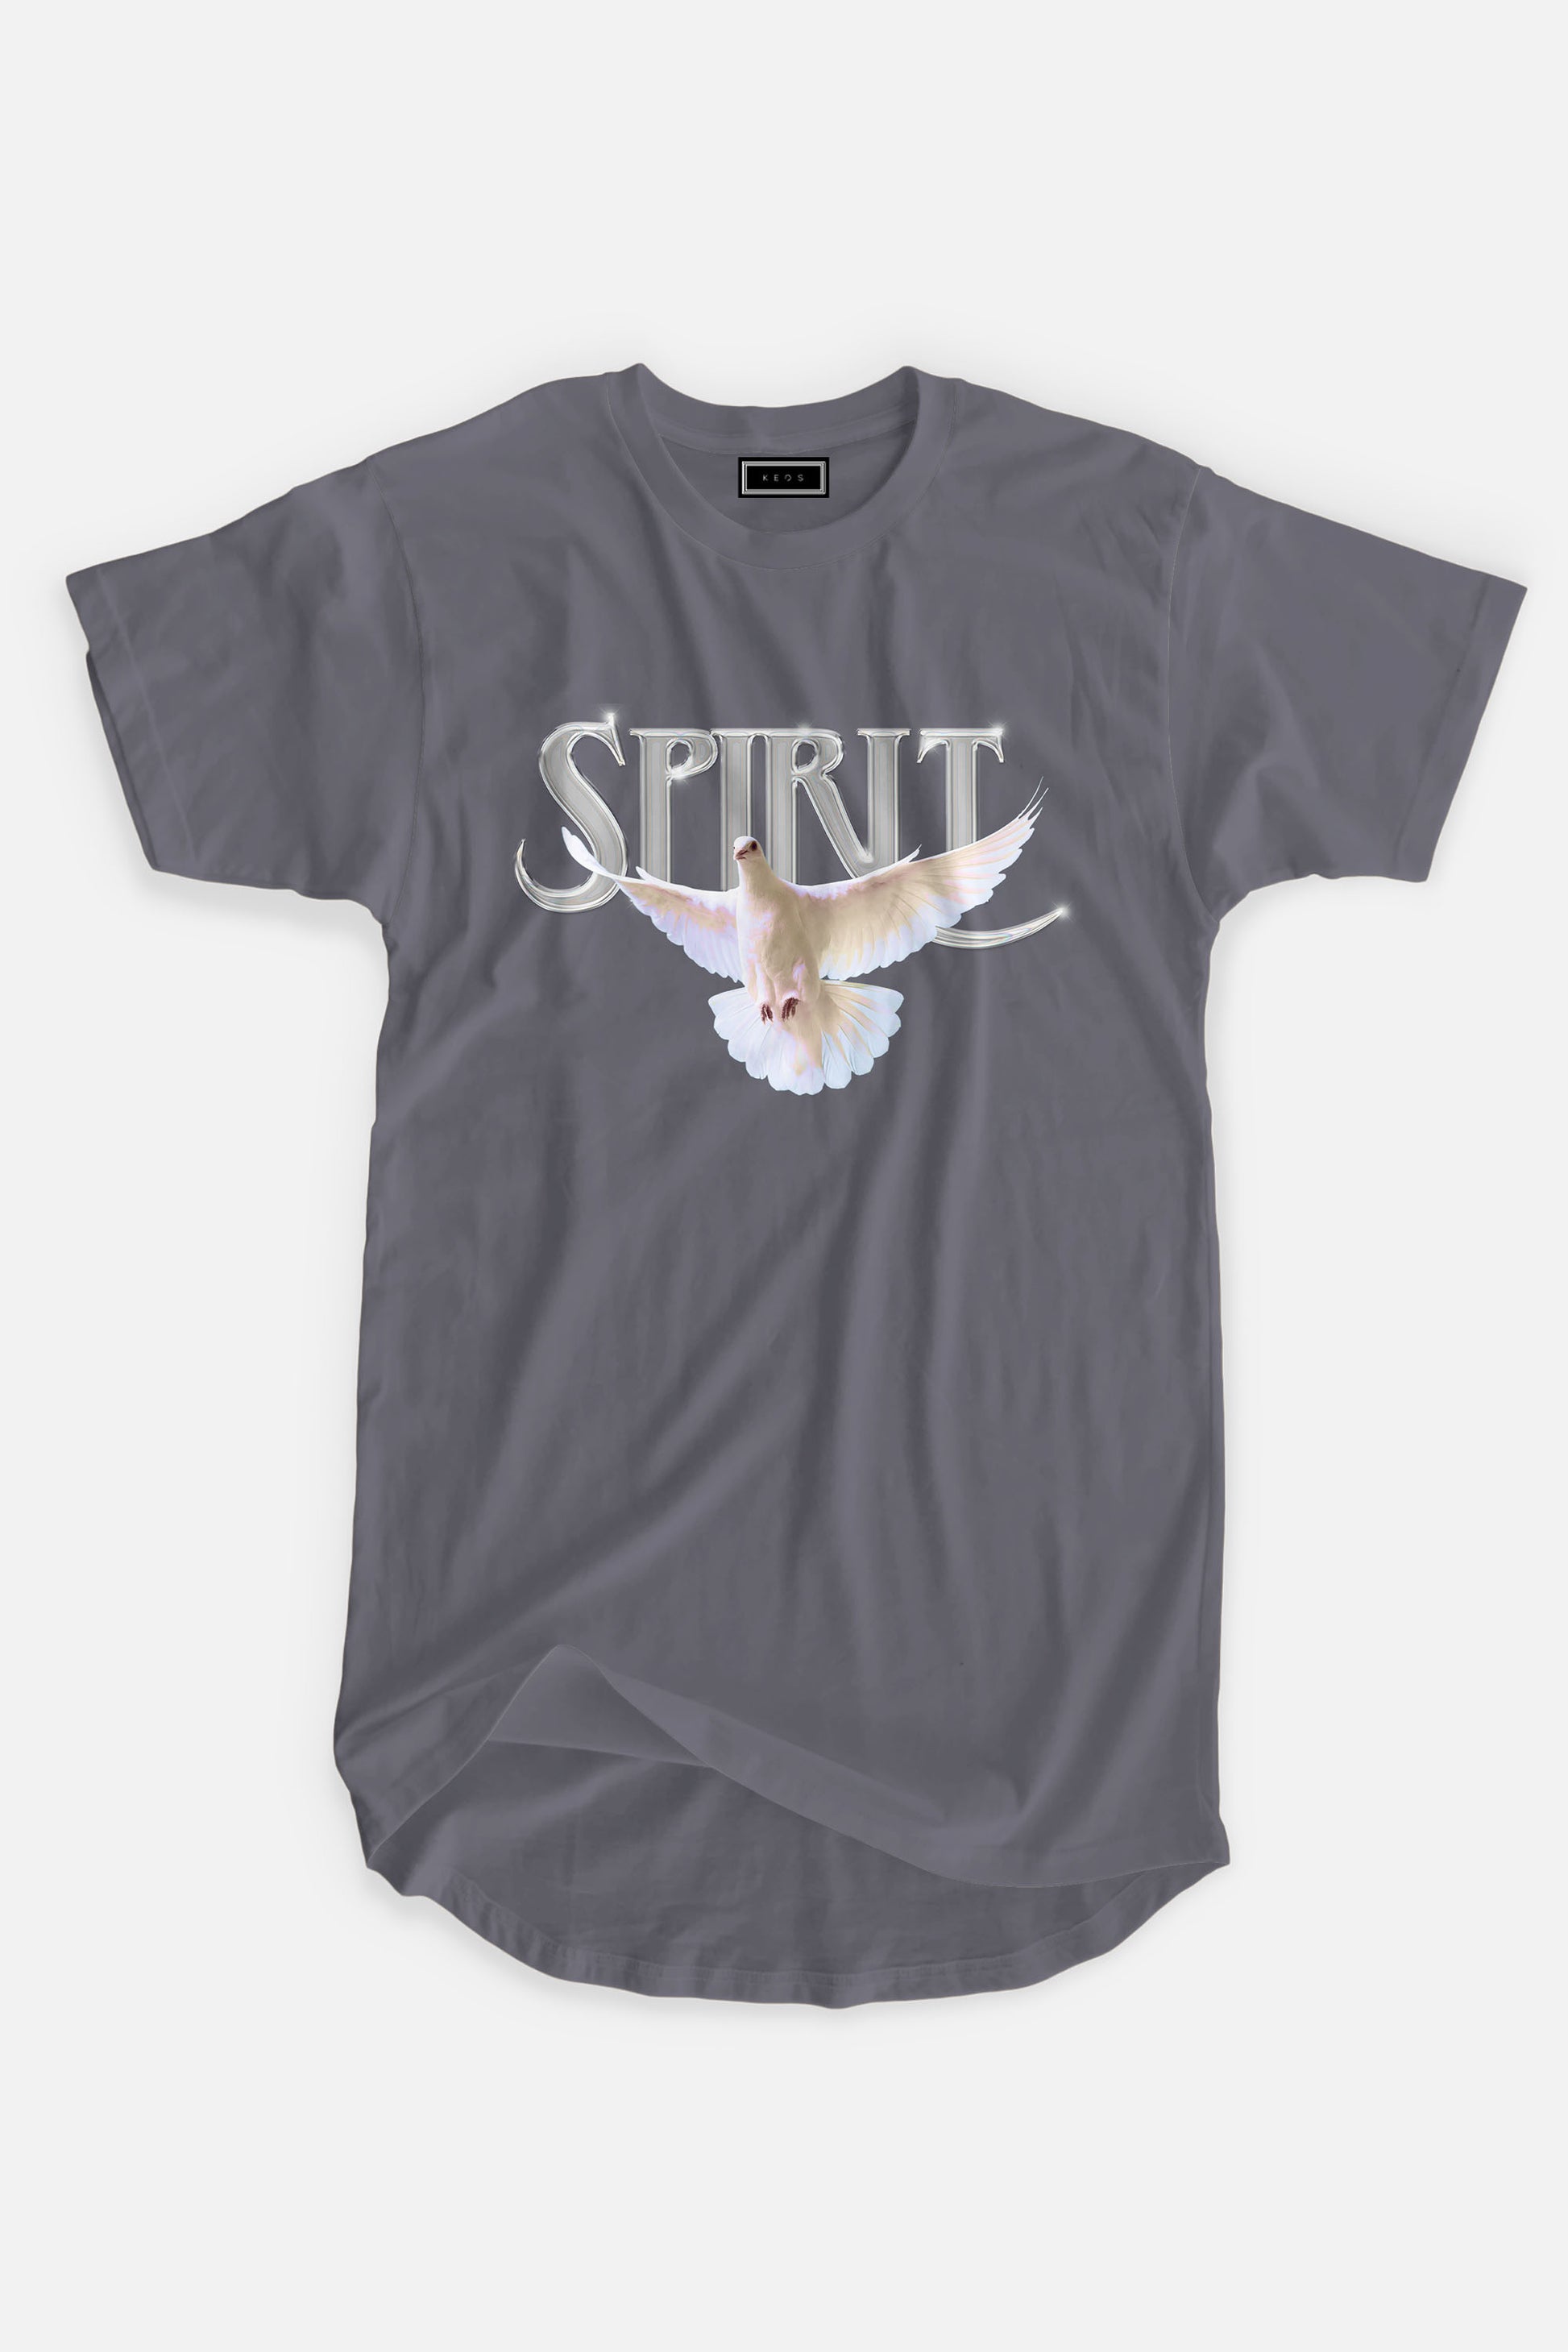 Spirit Organic Longline Cotton T-shirt - keos.life